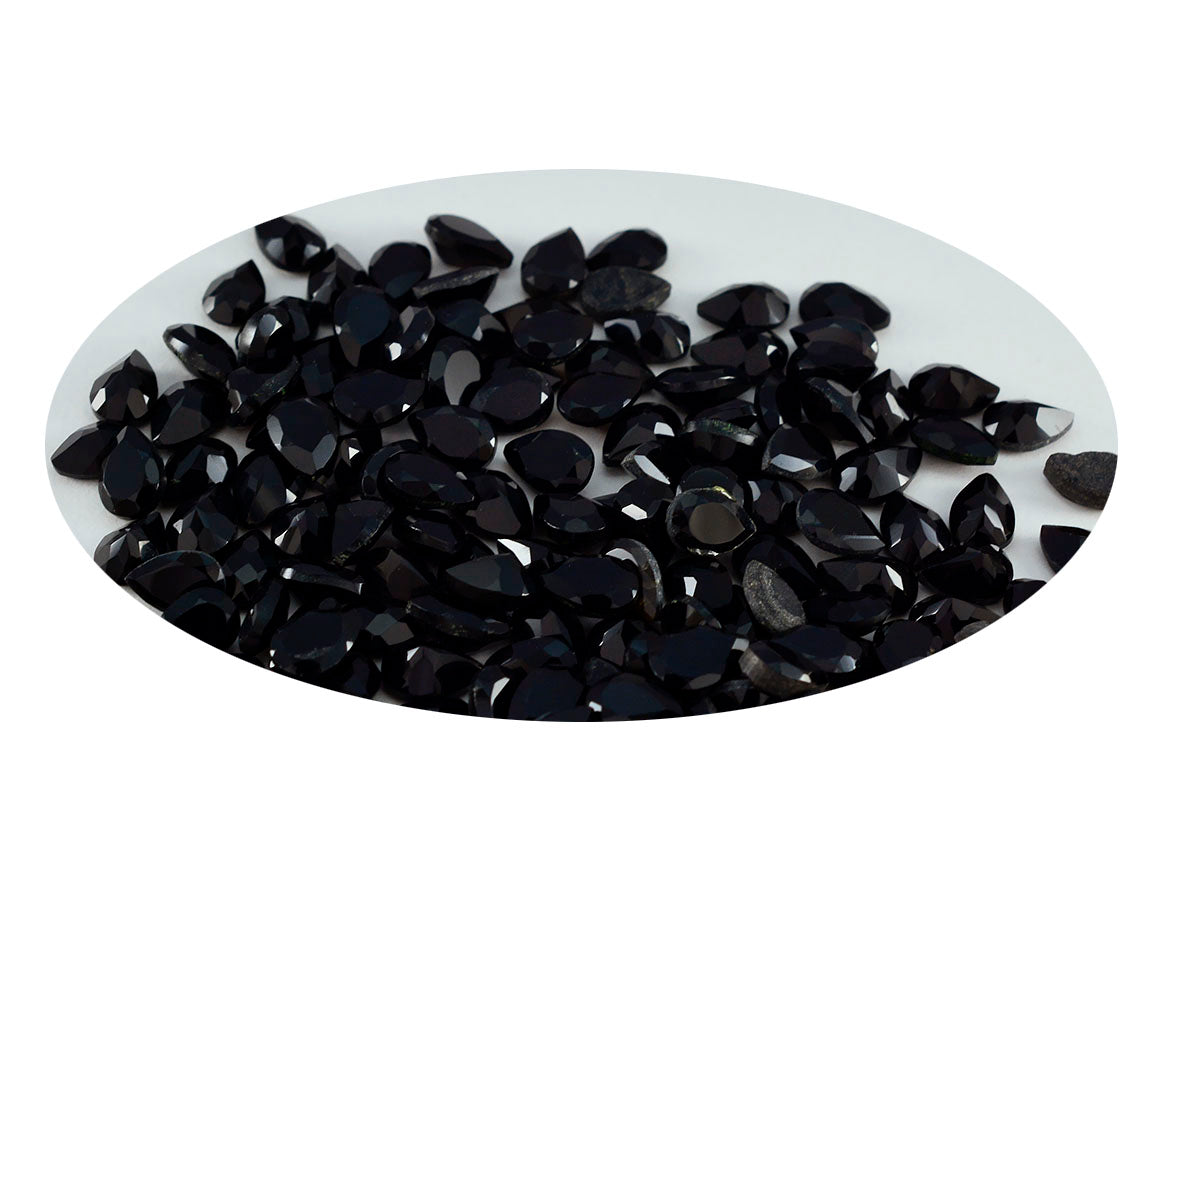 Riyogems 1PC Genuine Black Onyx Faceted 3x5 mm Pear Shape amazing Quality Loose Gems